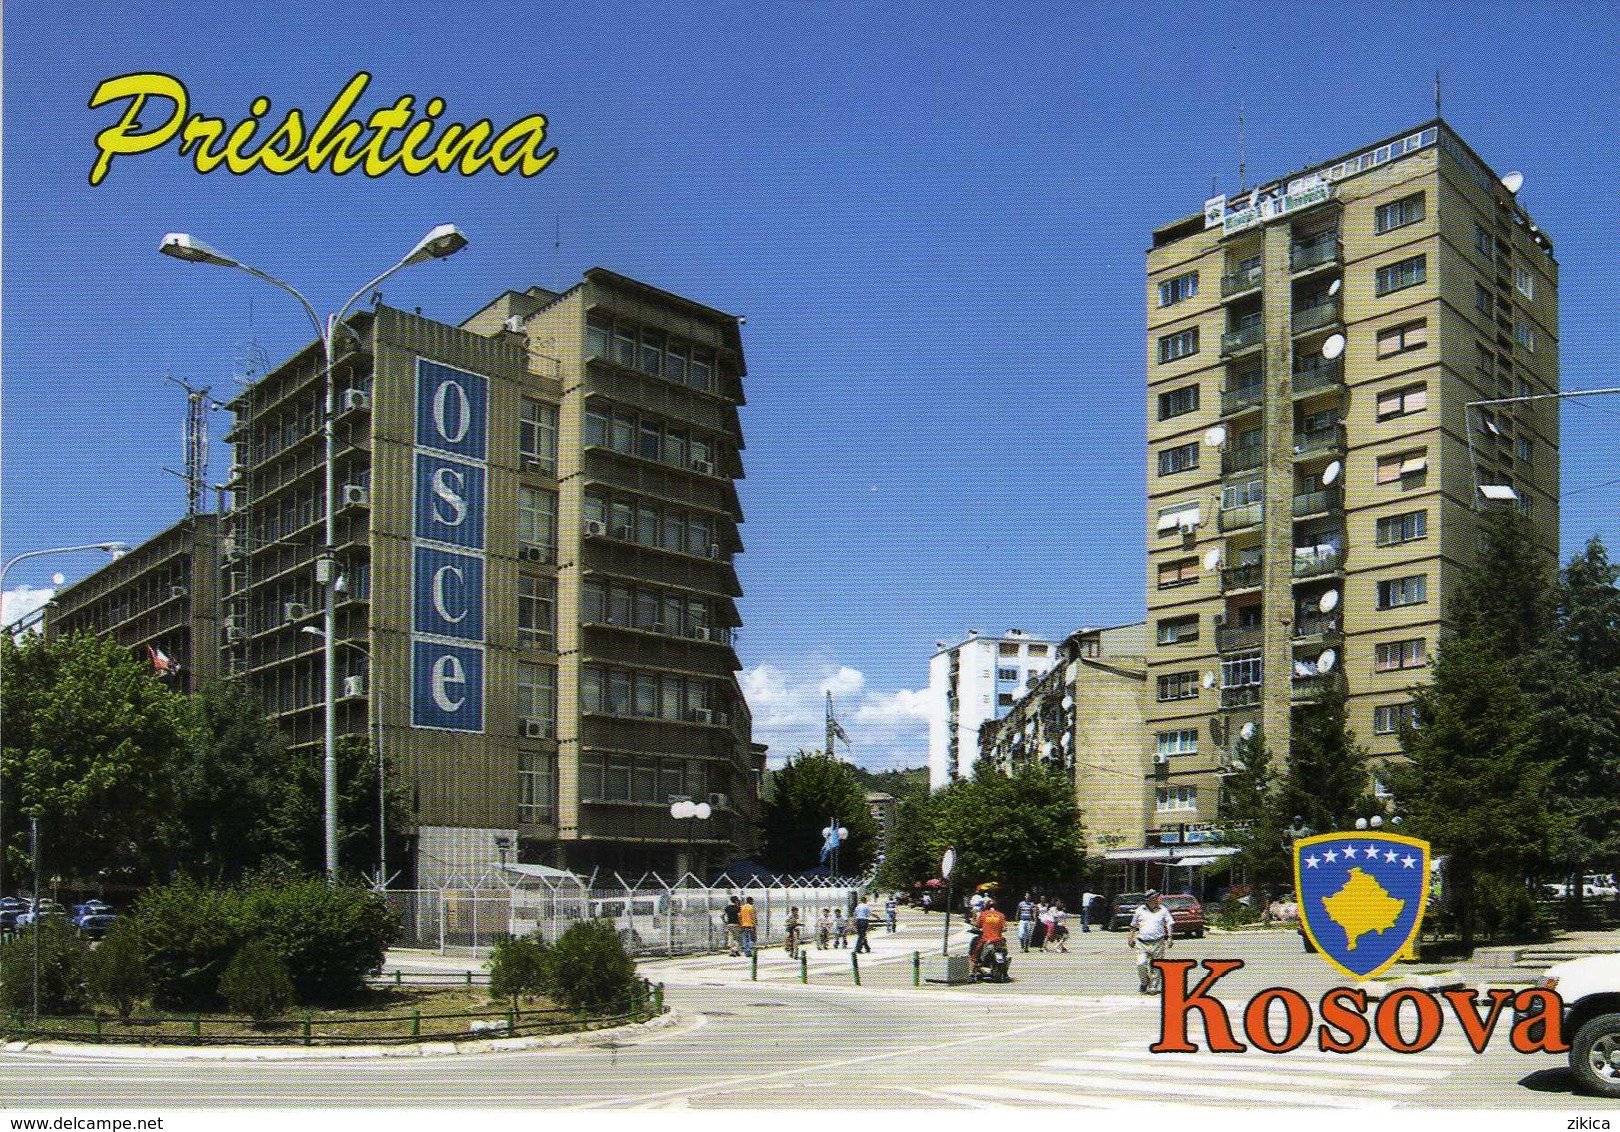 Capital City PRISTINA, View OSCE Headquarter, Kosovo (Serbia) New Postcards, ERROR Mitrovica Instead - Kosovo